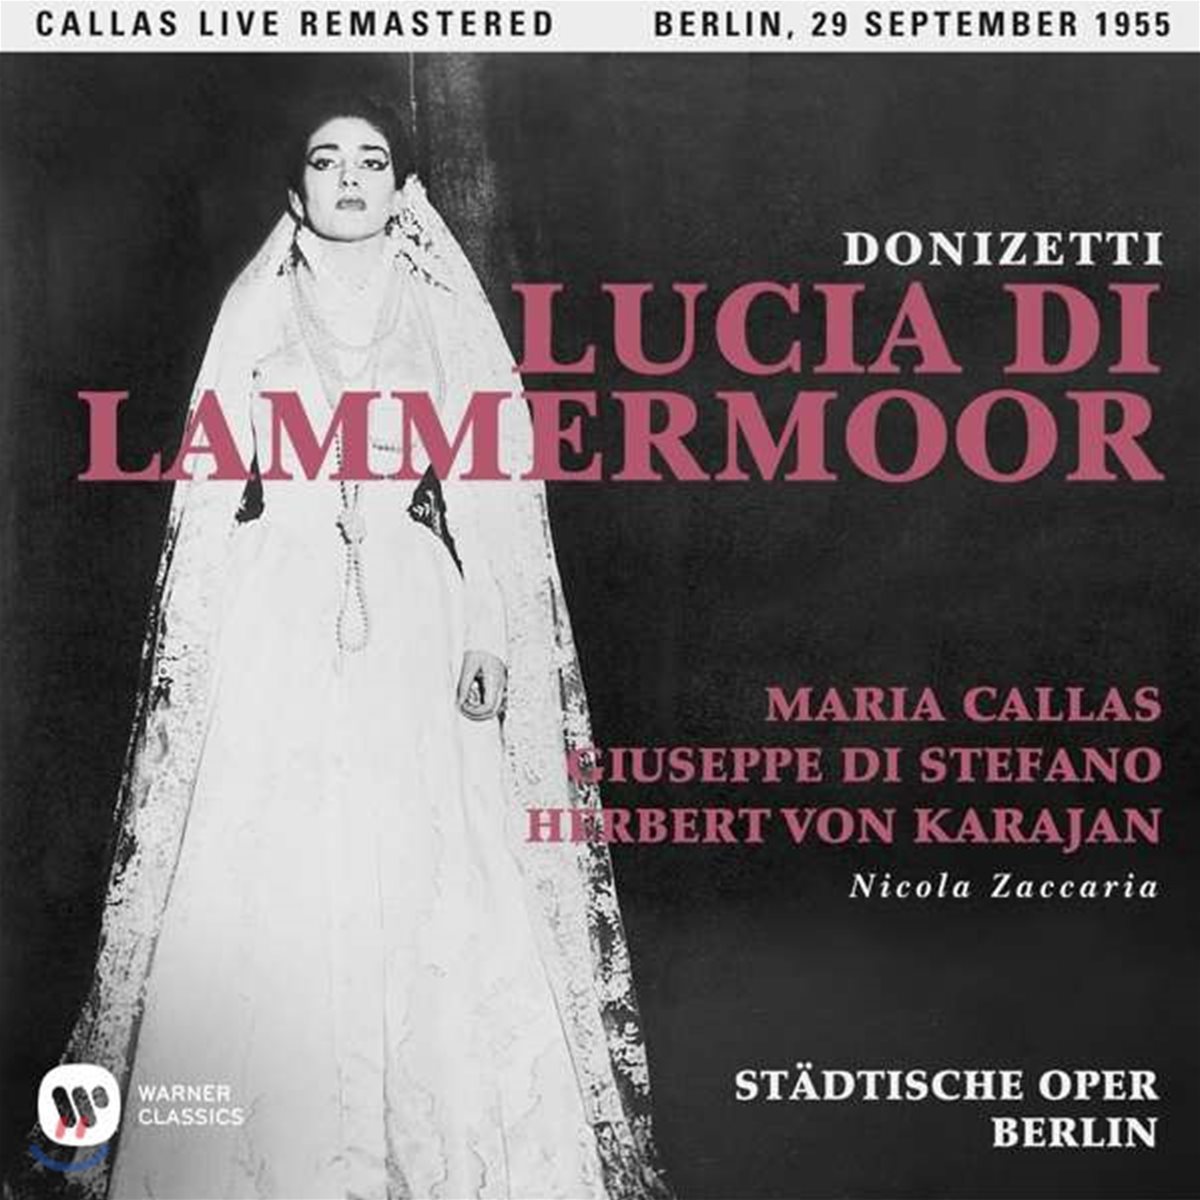 Maria Callas / Giuseppe di Stefano 도니제티: 람메르무어의 루치아 - 마리아 칼라스, 주세페 디 스테파노 / 1955년 베를린 실황 (Donizetti: Lucia di Lammermoor)